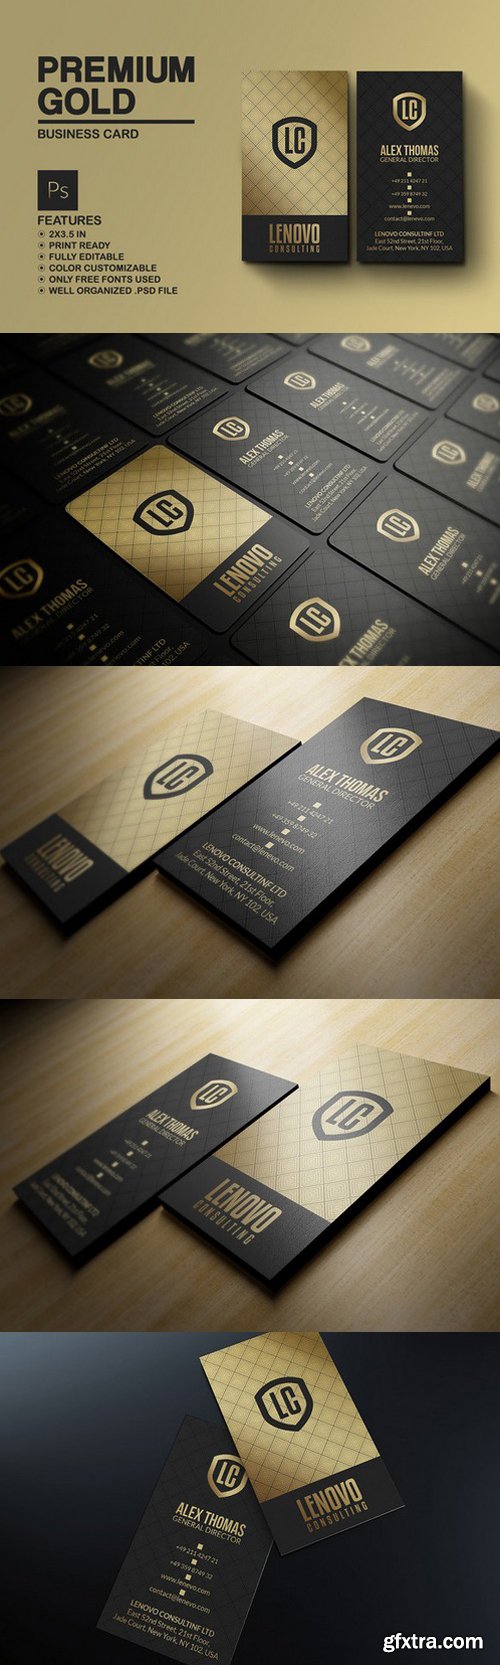 CM - Premium Gold And Black Business Card 786200